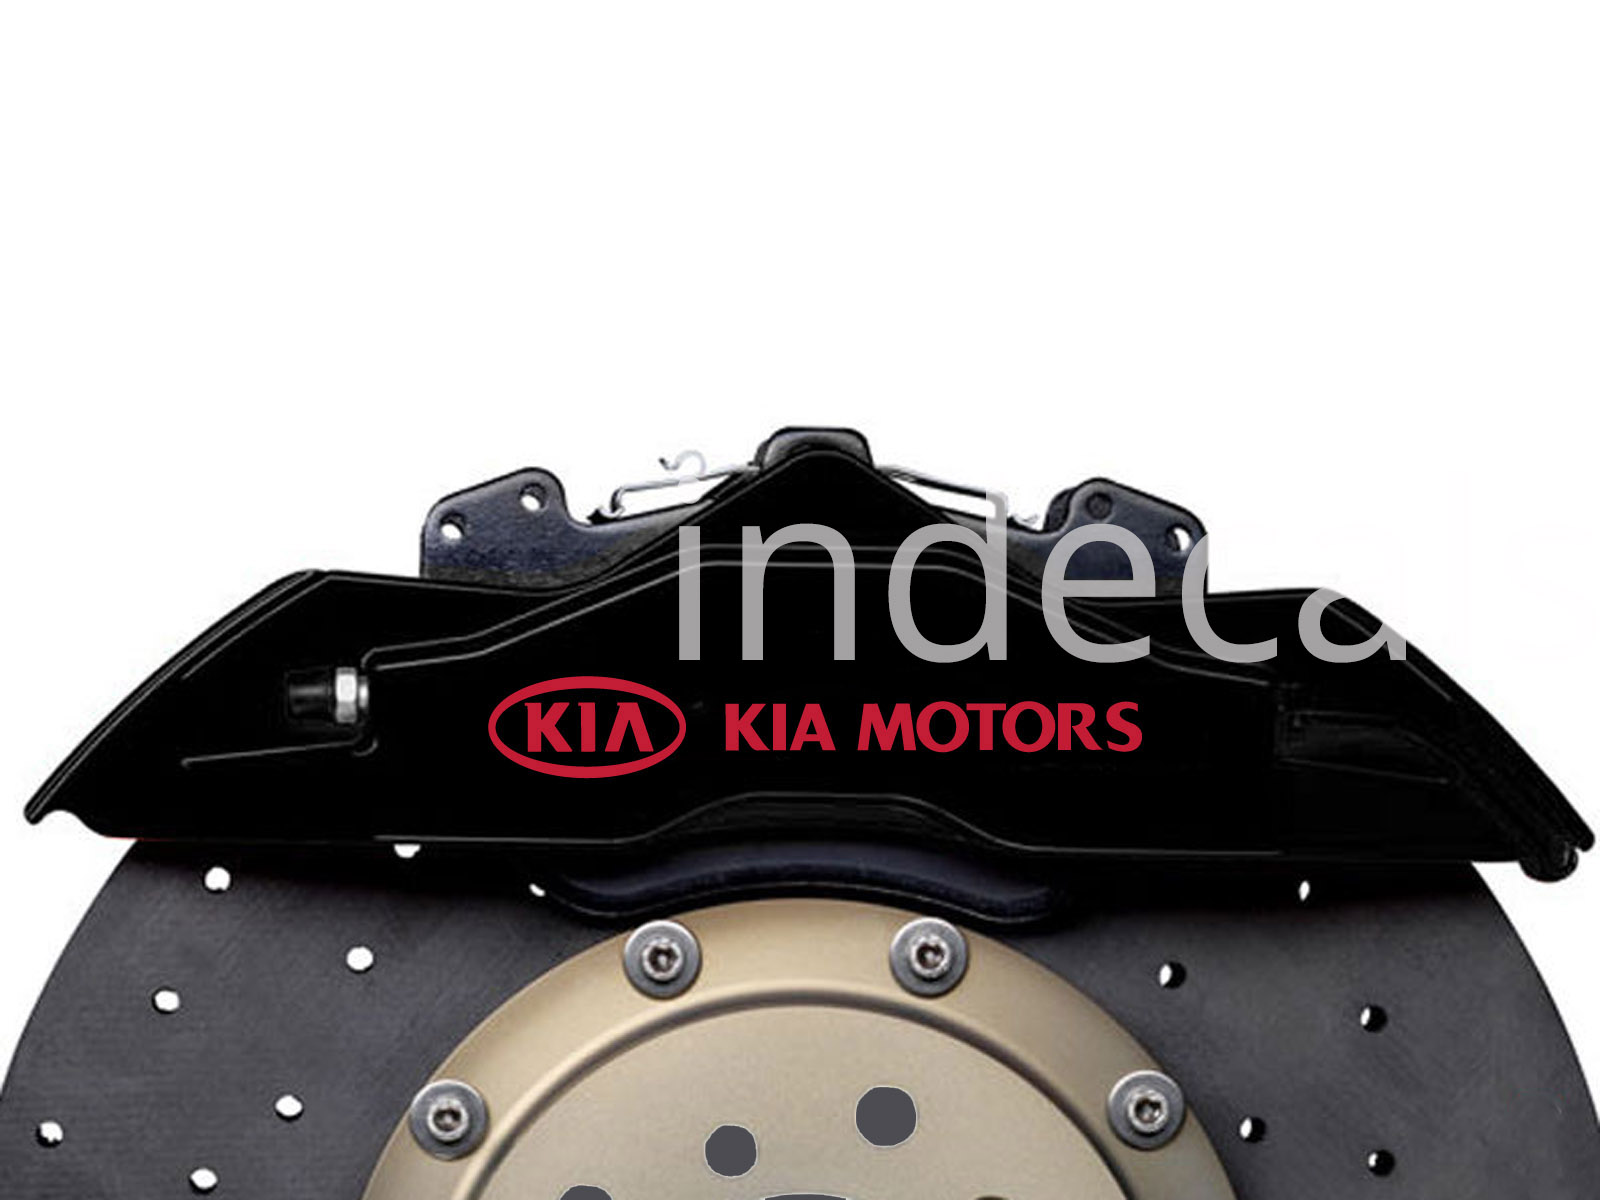 6 x Kia Stickers for Brakes - Red